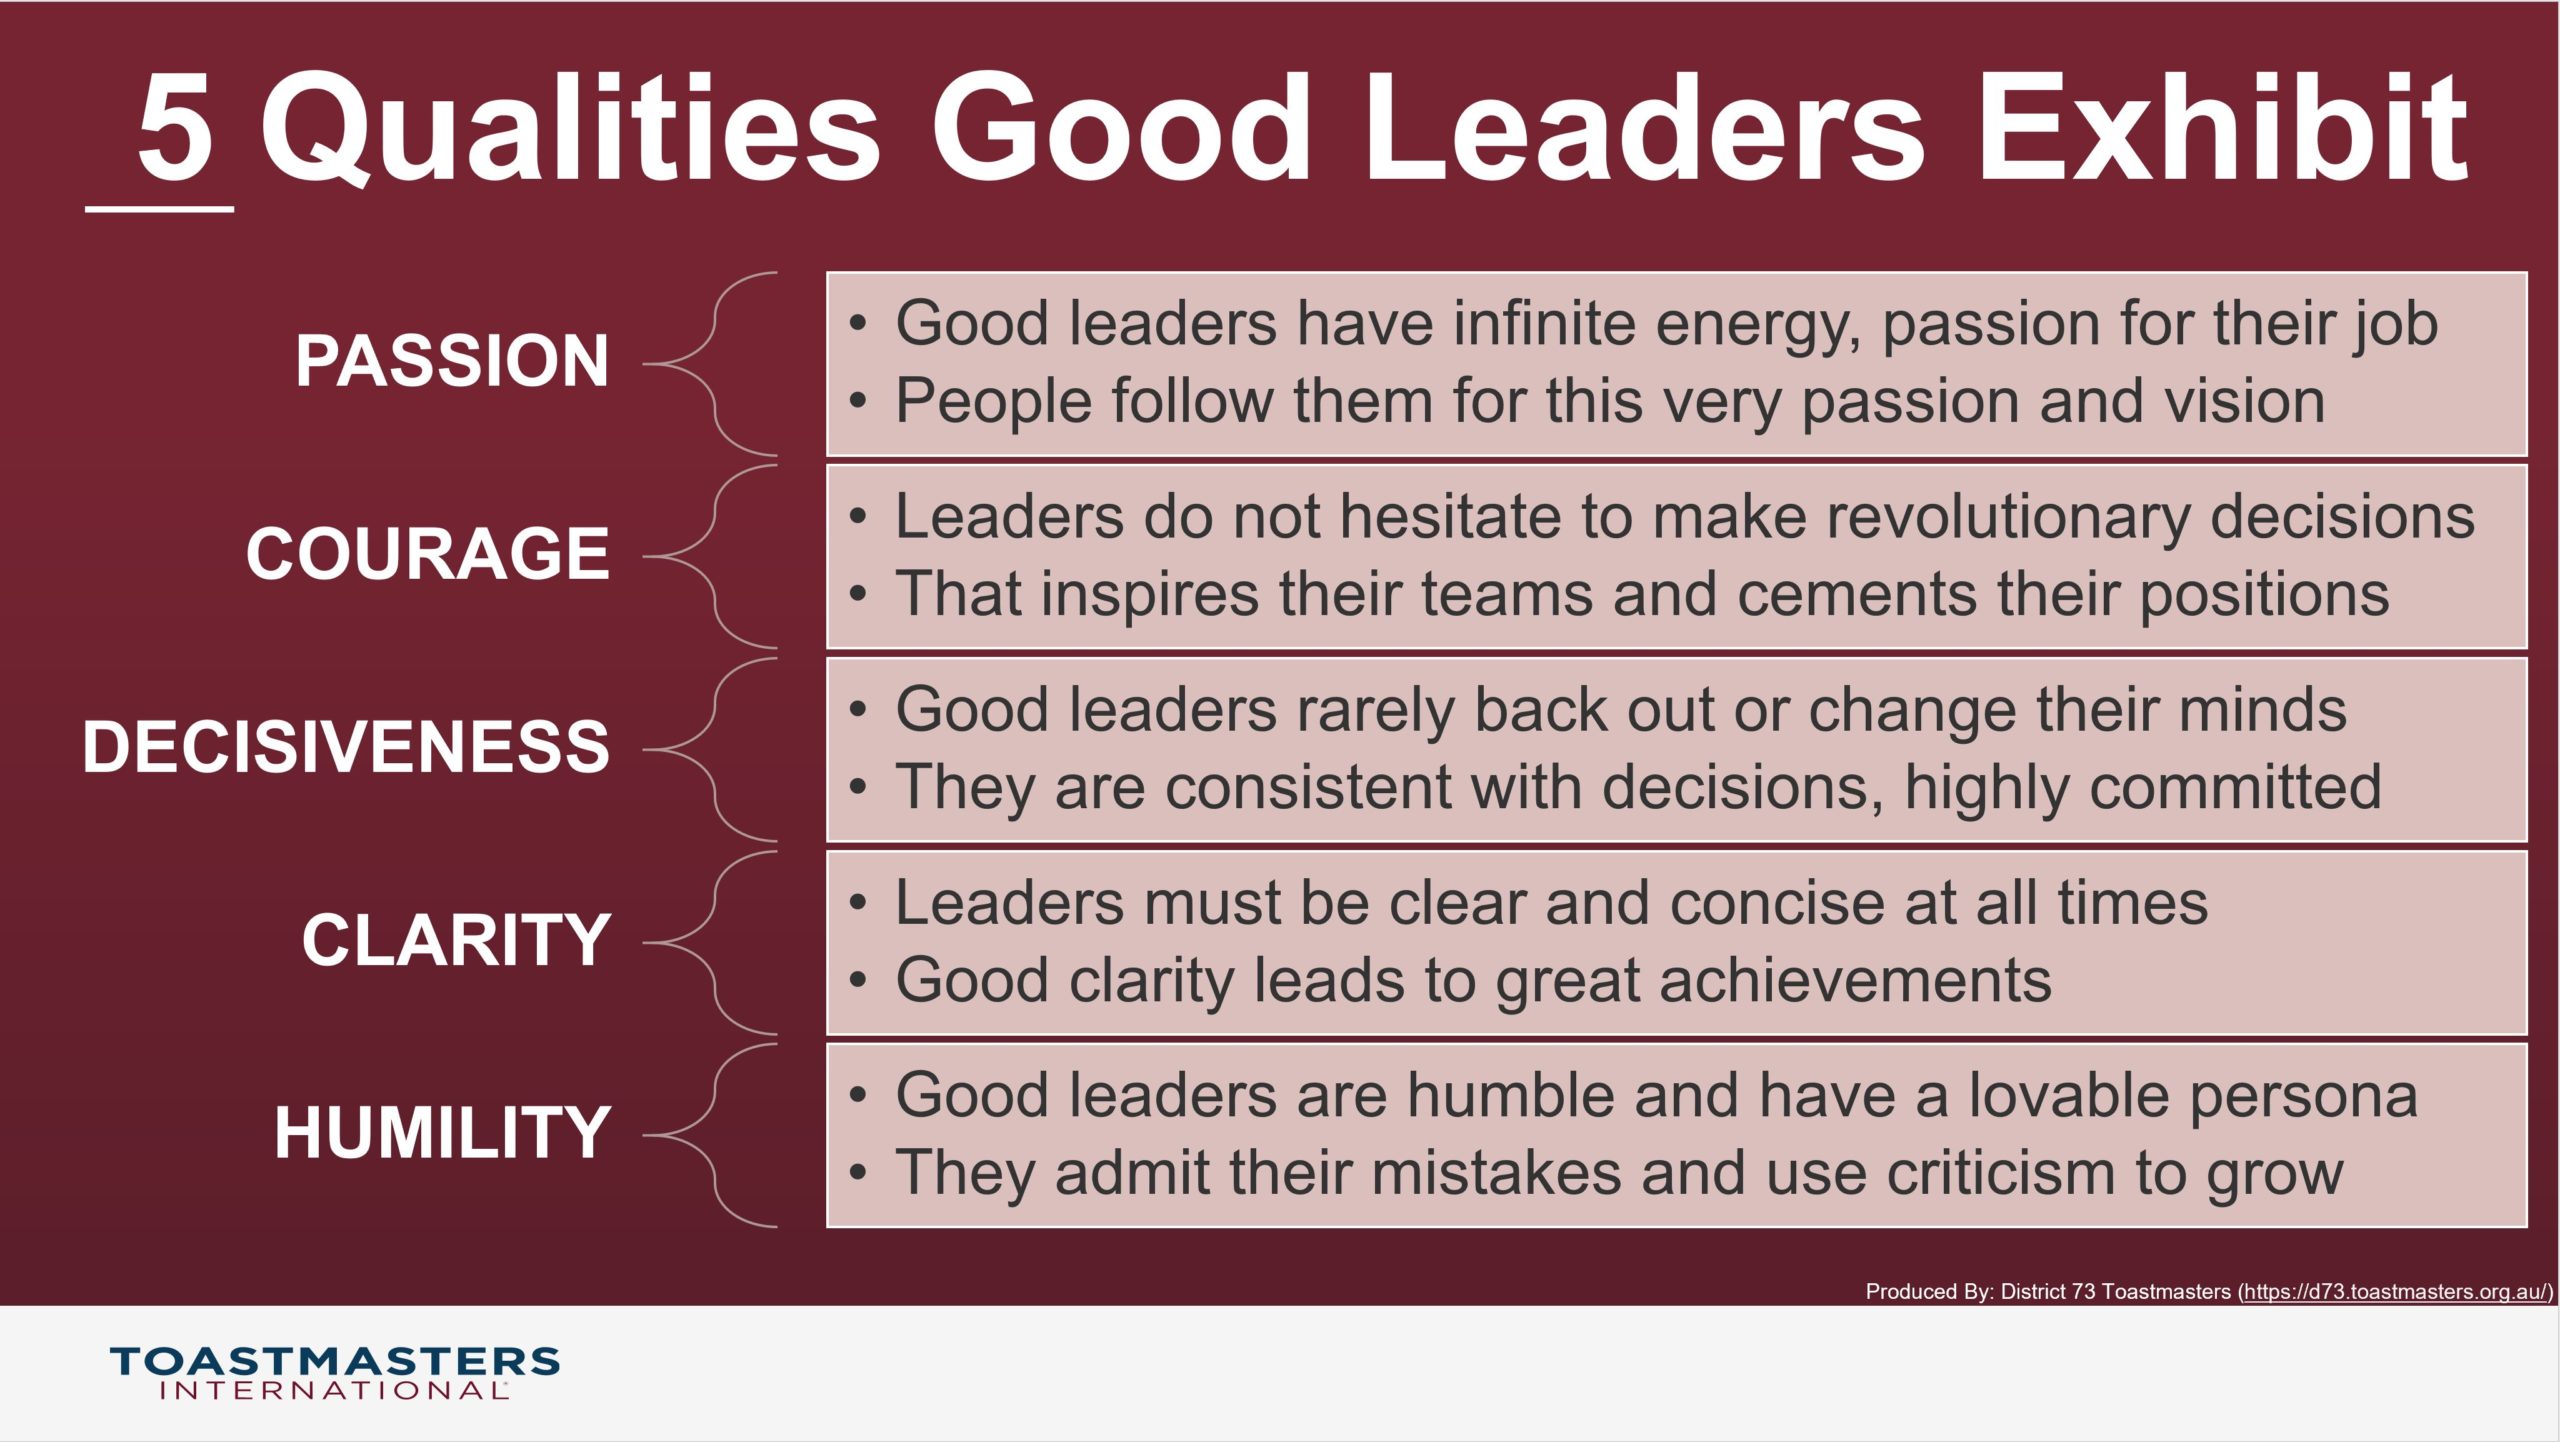 5 Qualities Good Leaders Exhibit